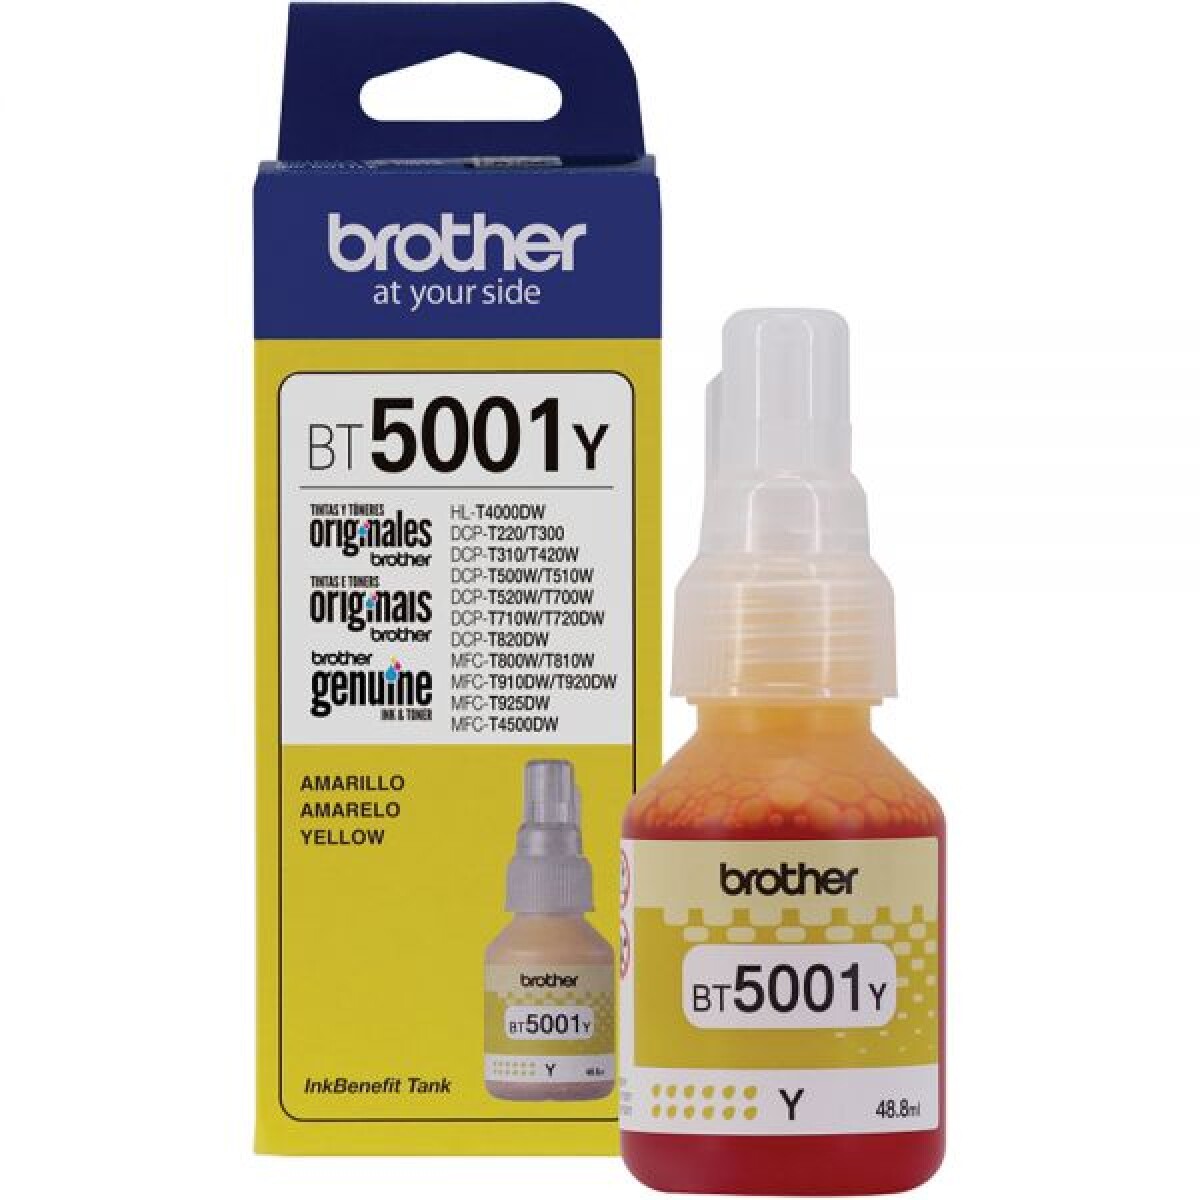 Botella de tinta brother bt5001 48.8ml - Yellow 